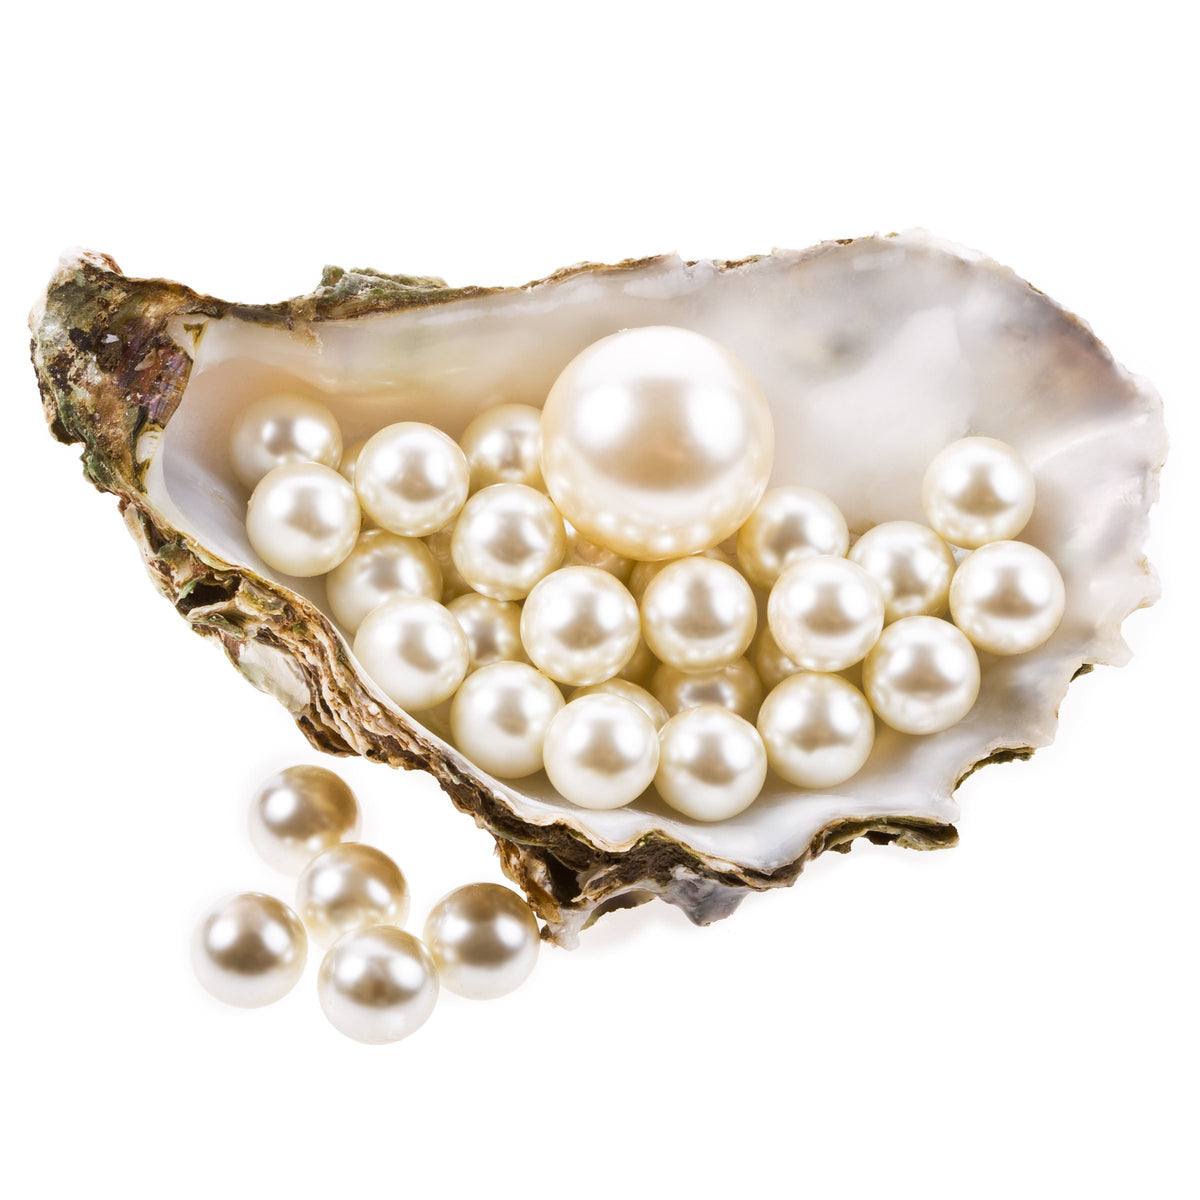 Brief History: Pearls